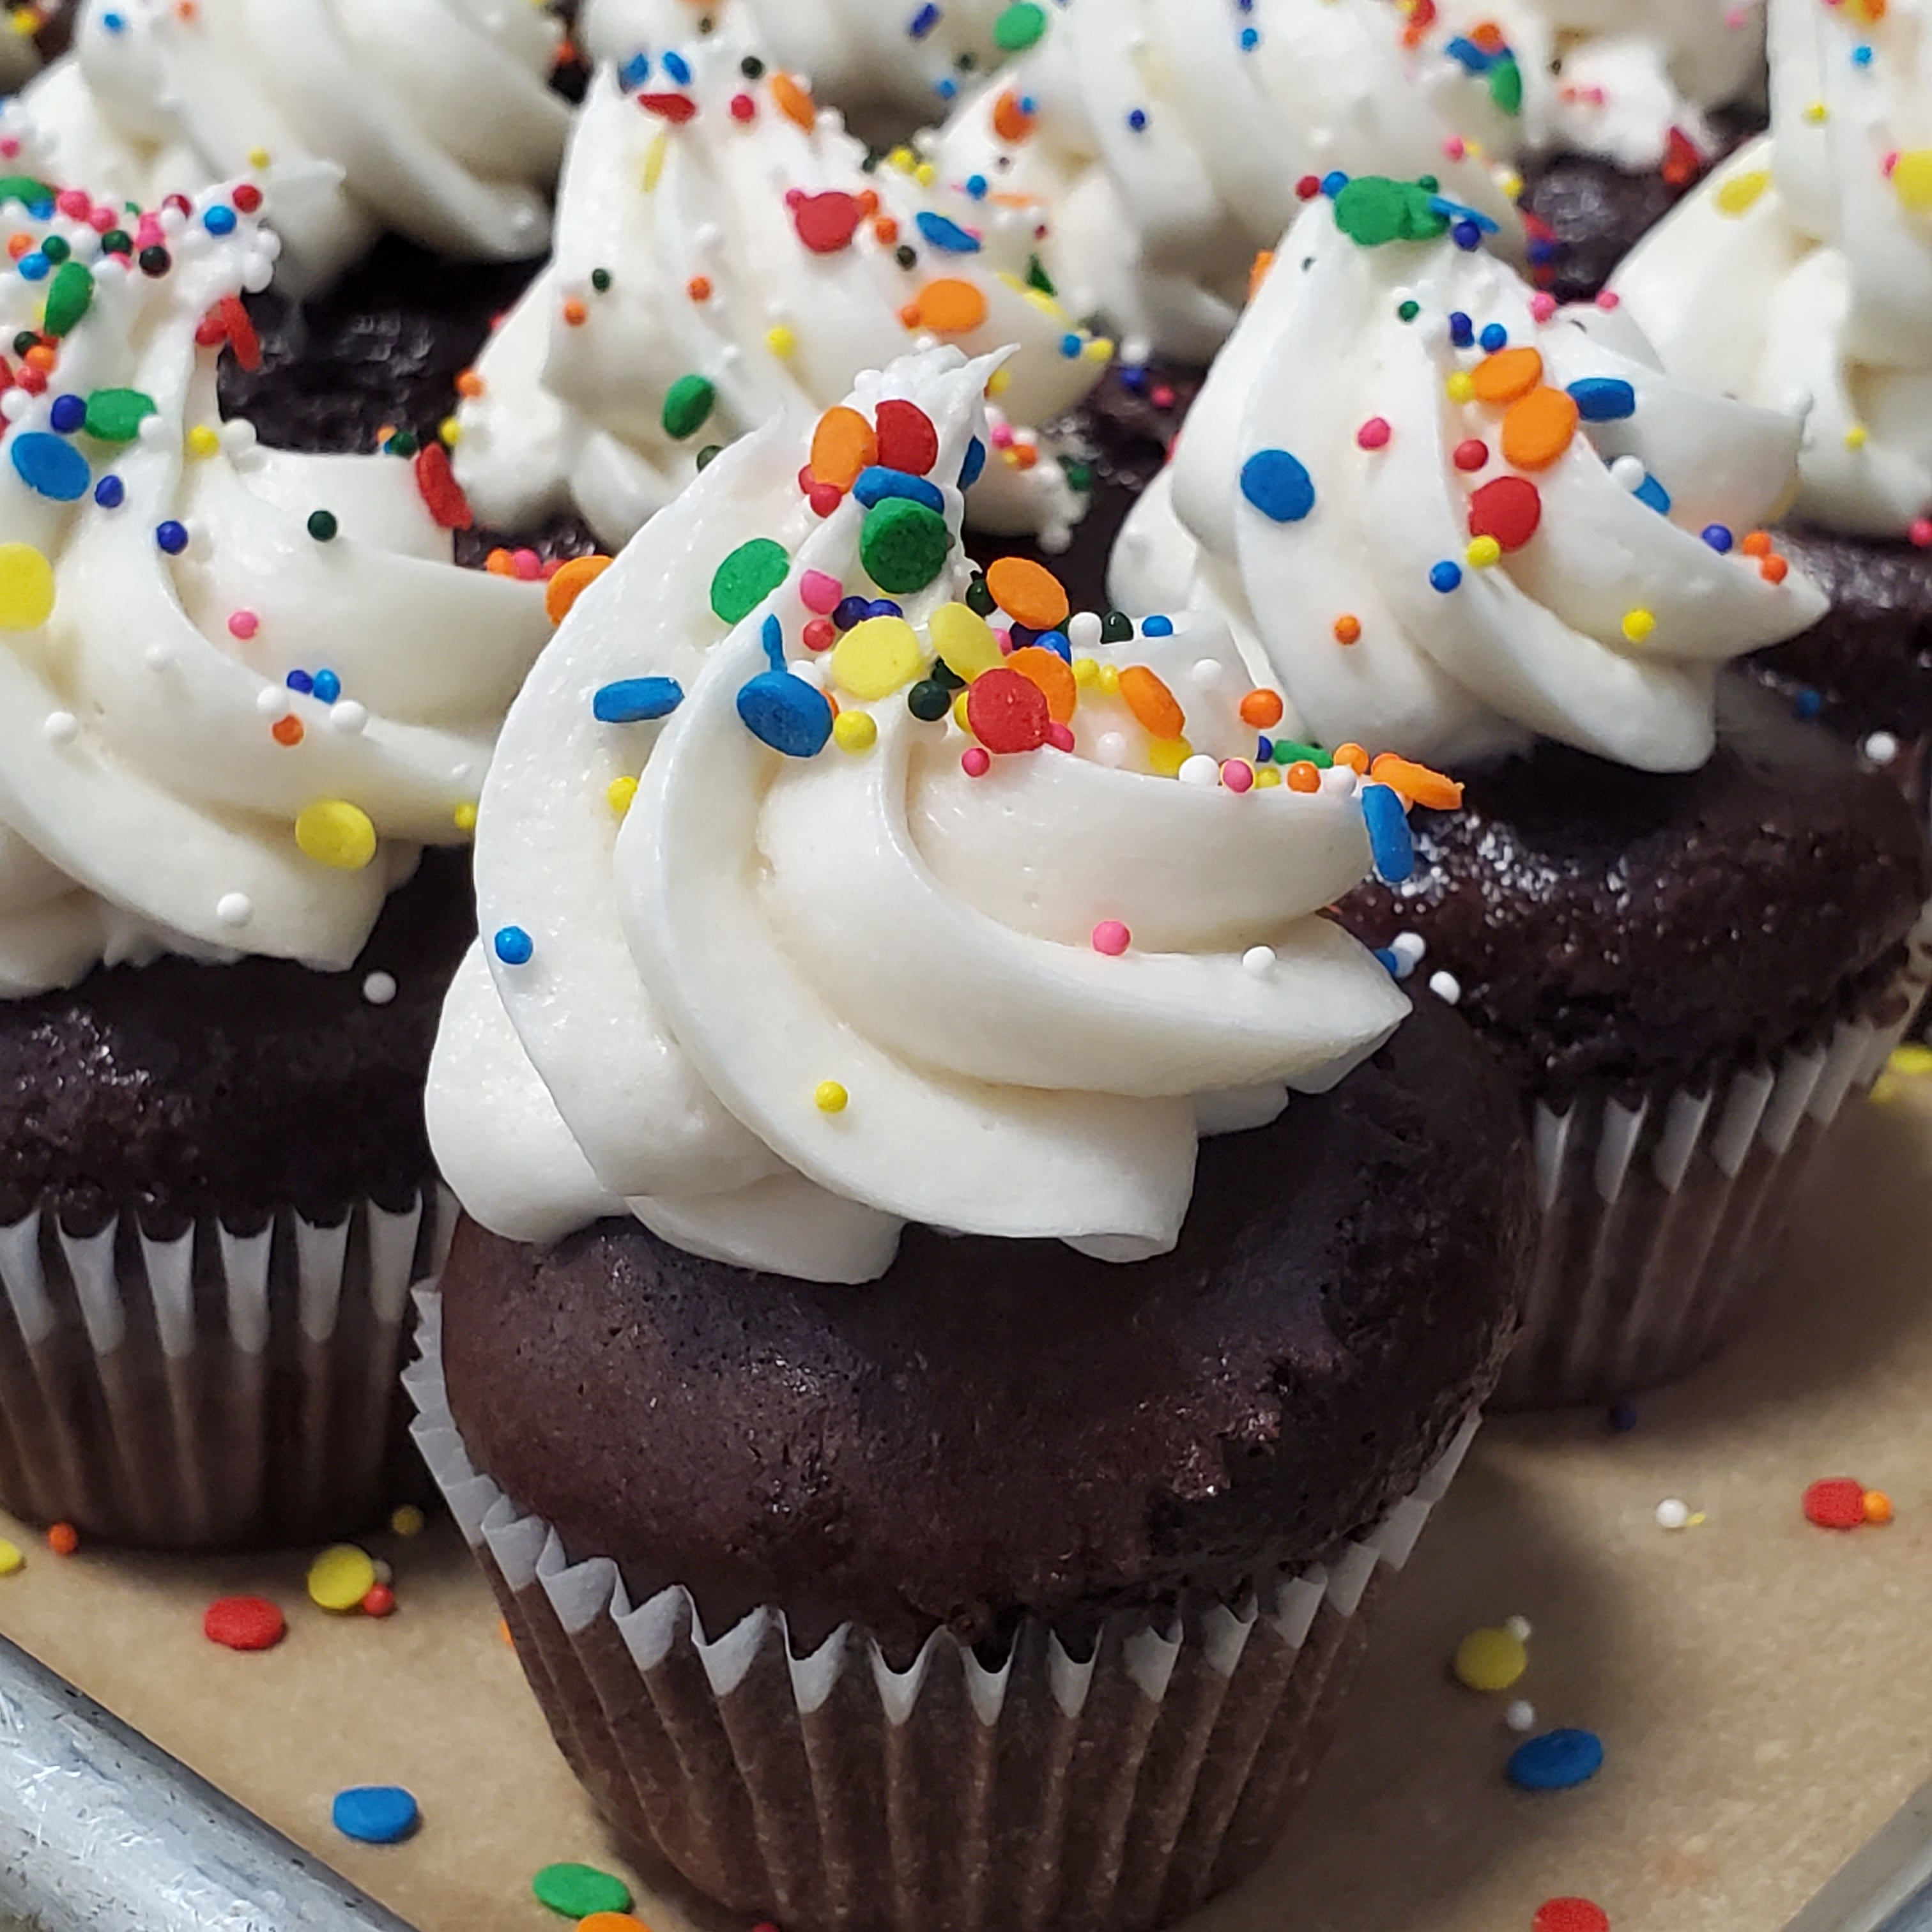 Coffeecake & Brownie Gift Set  Artisan-Crafted Gluten-Free – Mariposa  Baking Co.